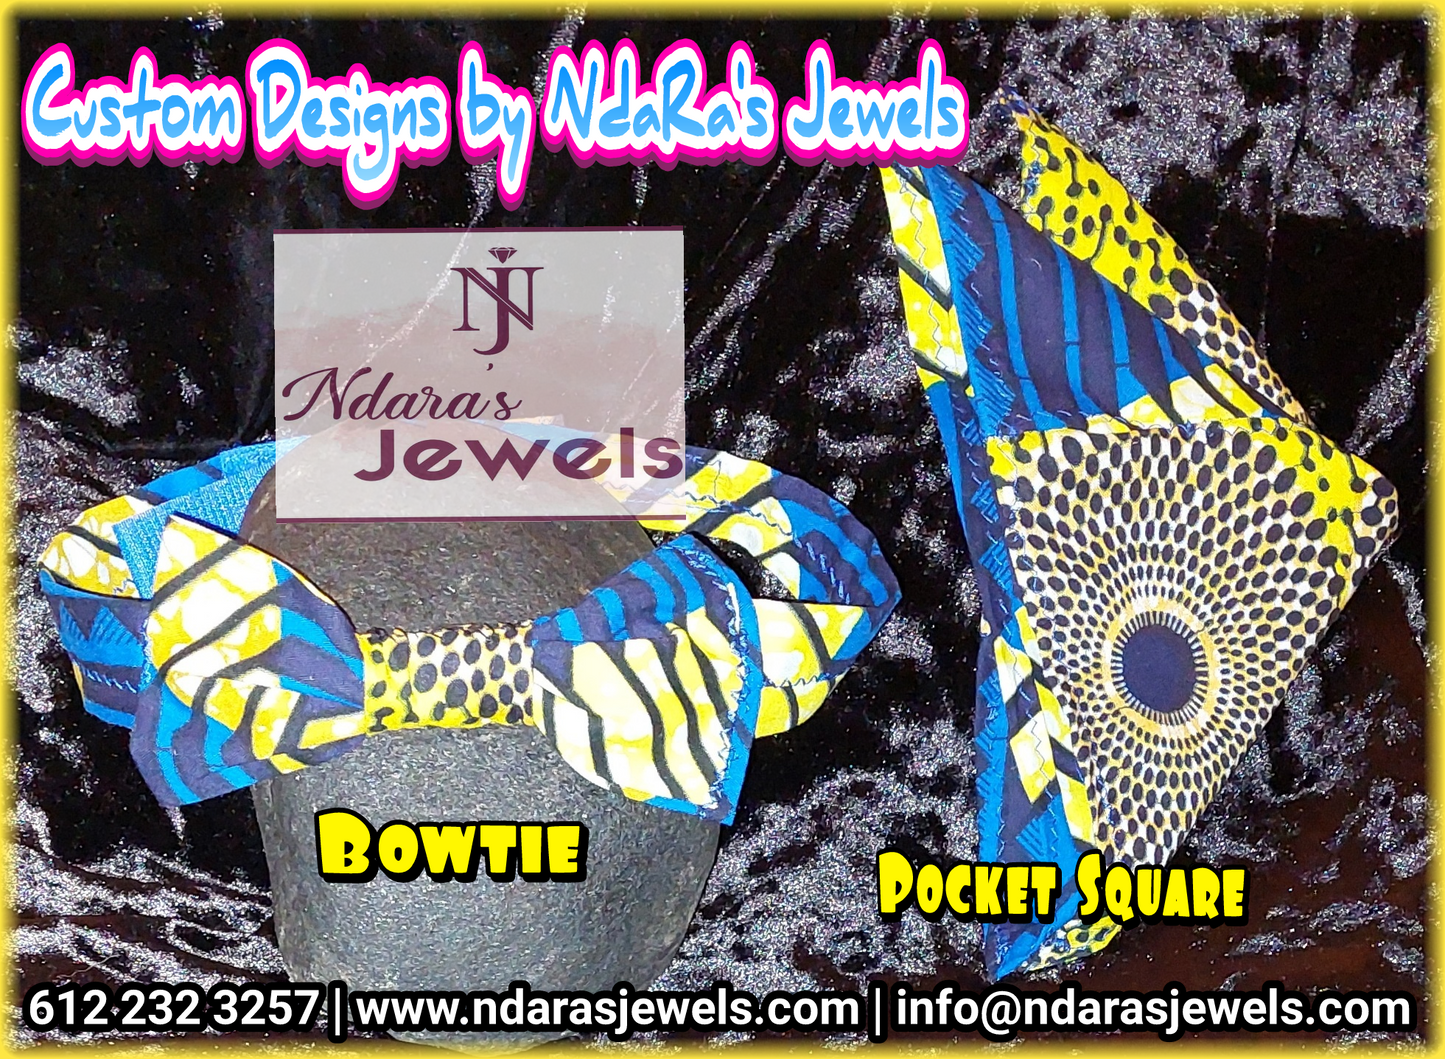 Ankra Fashion Bowtie & Pocket Square Duo